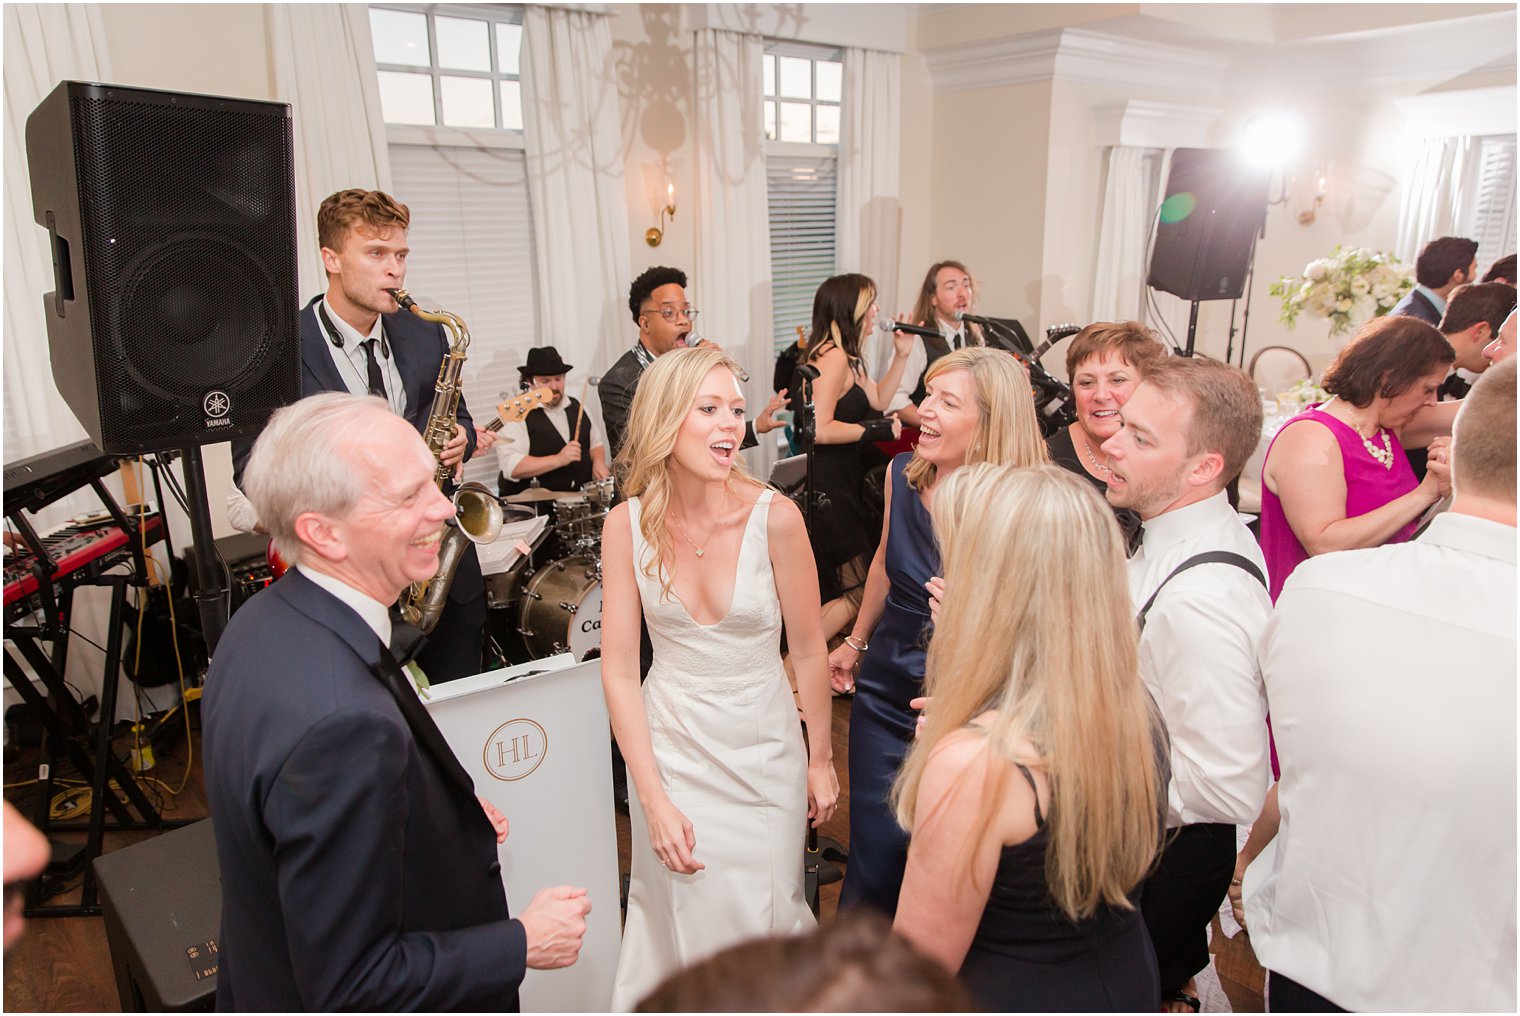 Wedding reception dancing to music by Hank Lane Band at Stone Harbor Golf Club Wedding 